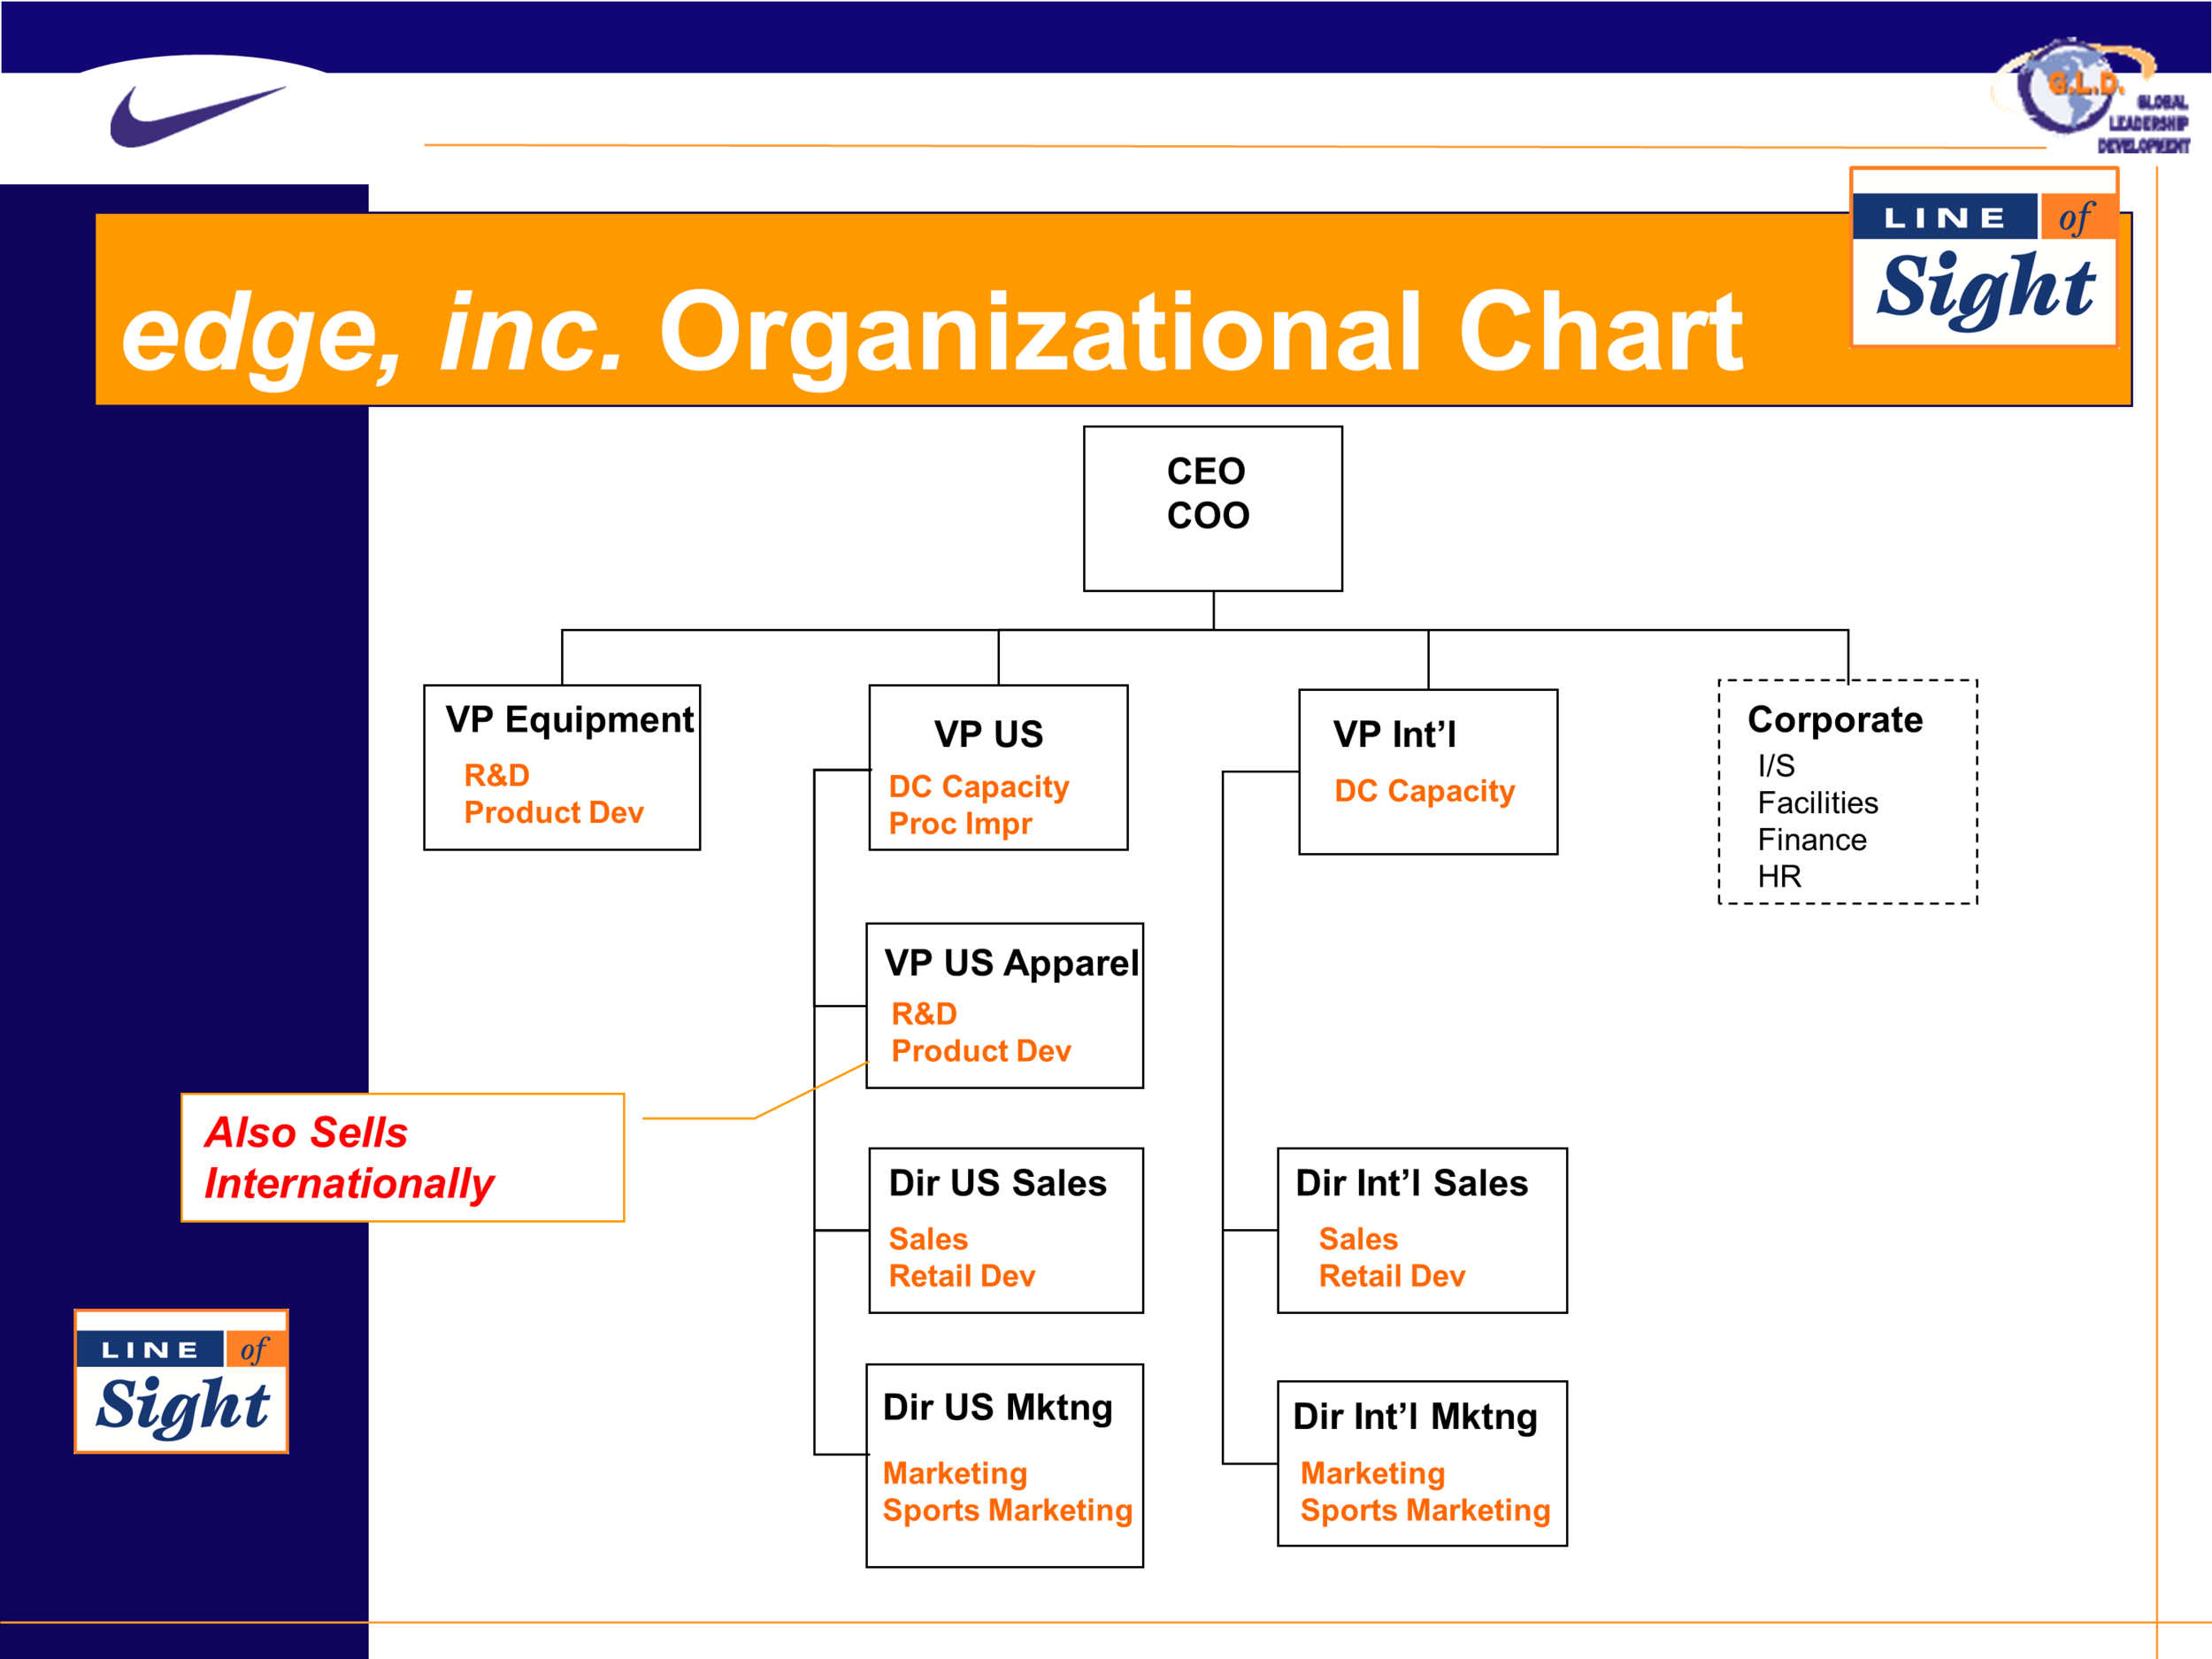 nike inc organizational structure